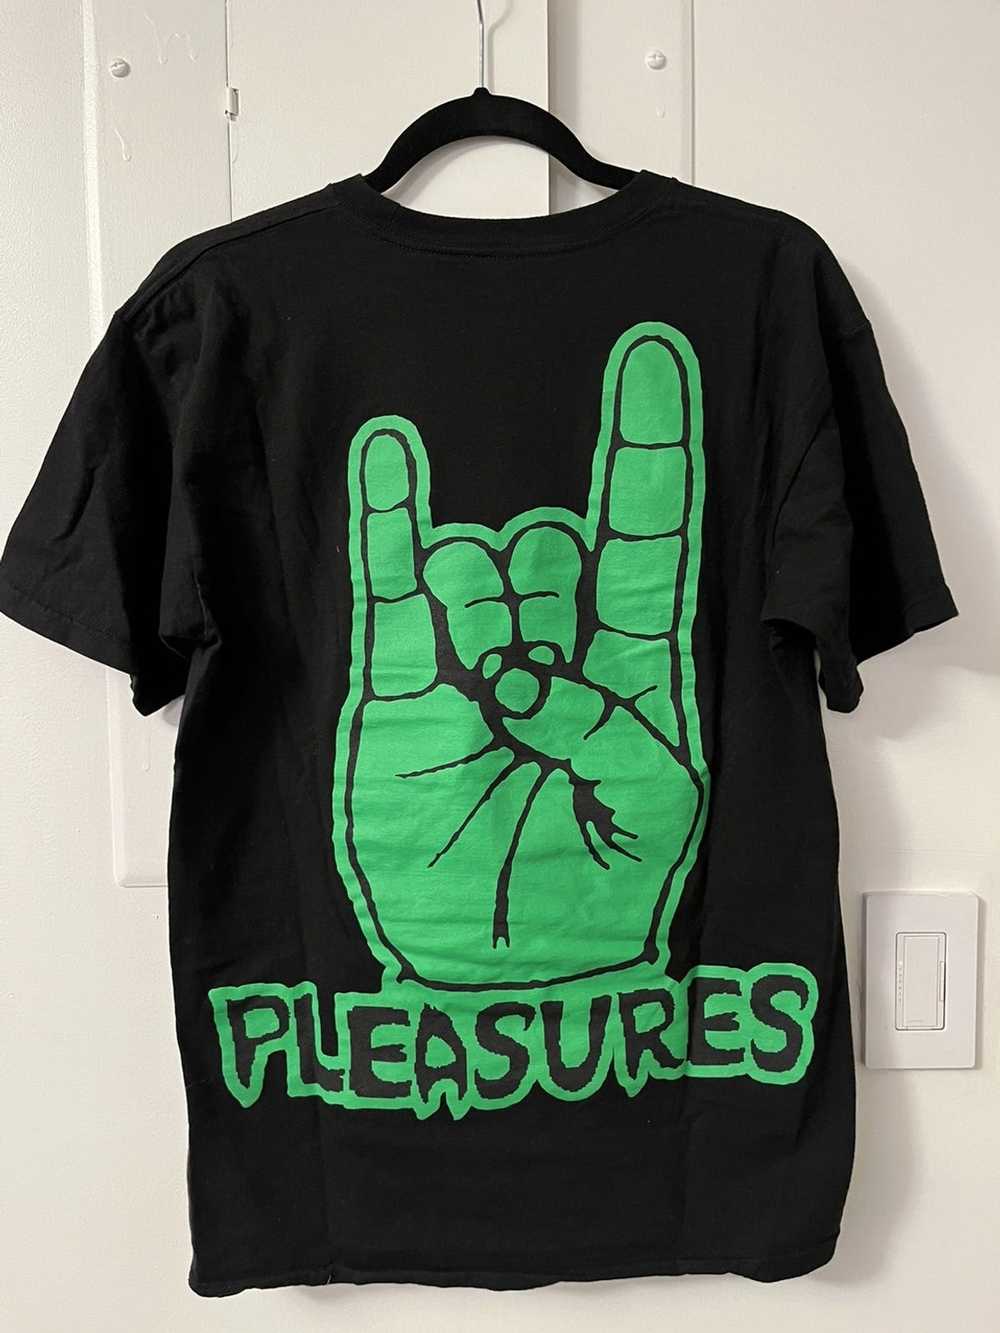 Pleasures Pleasures Rock Tee - image 3